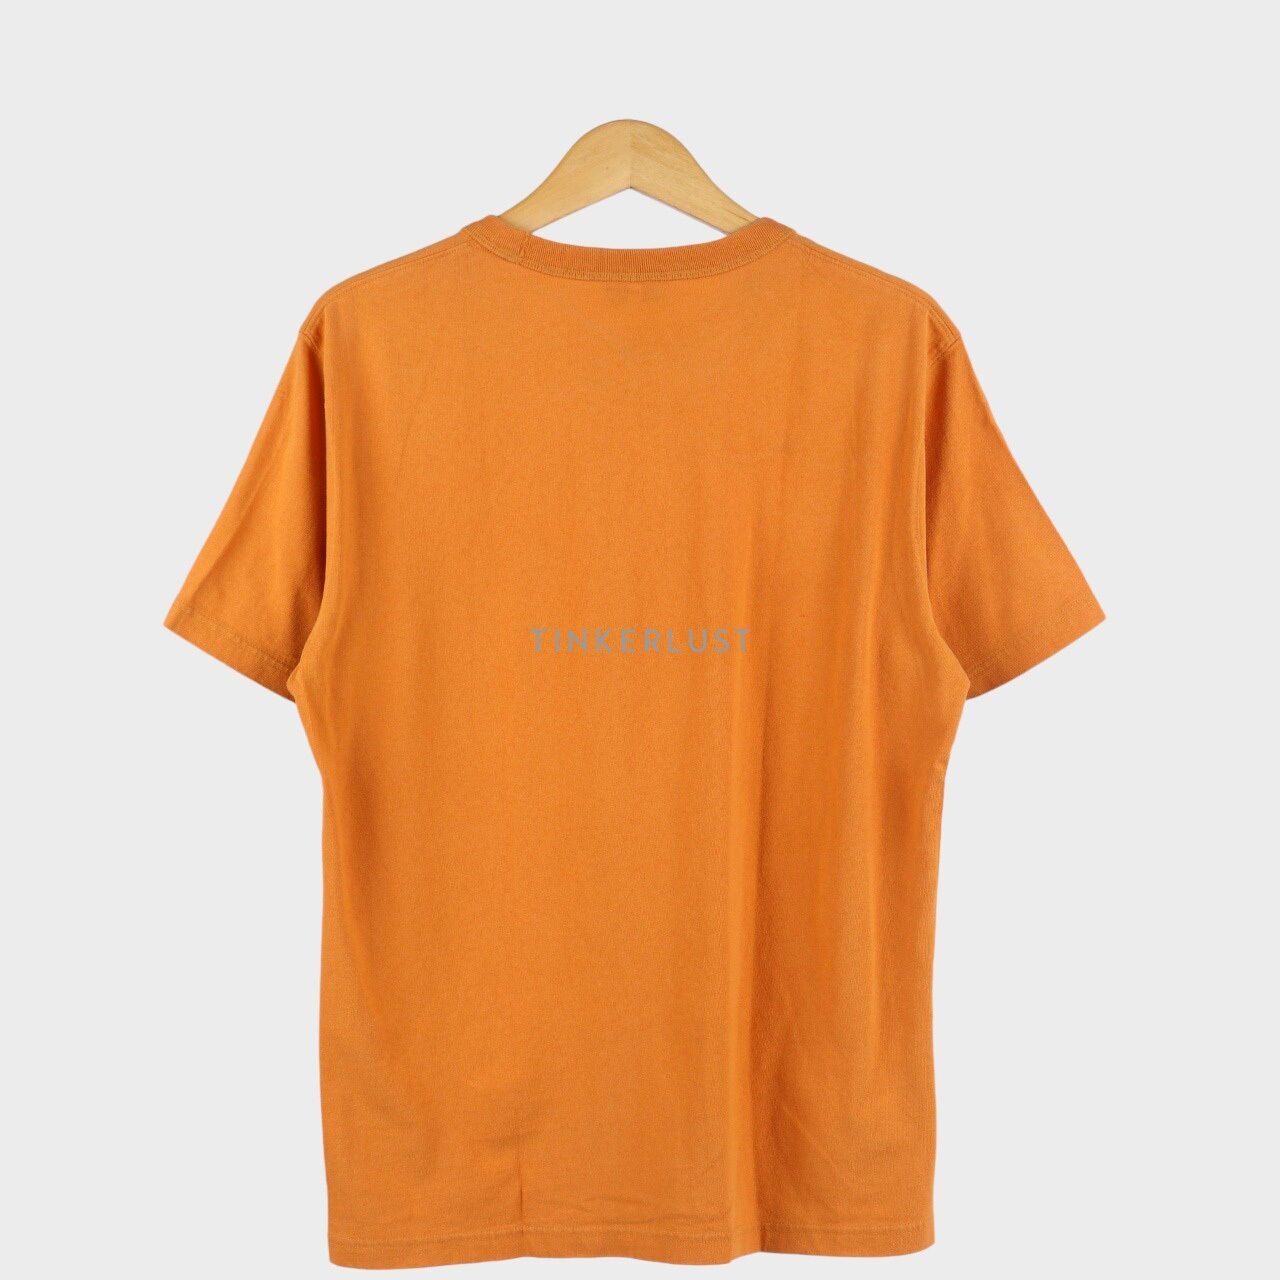 UNIQLO Orange T-Shirt